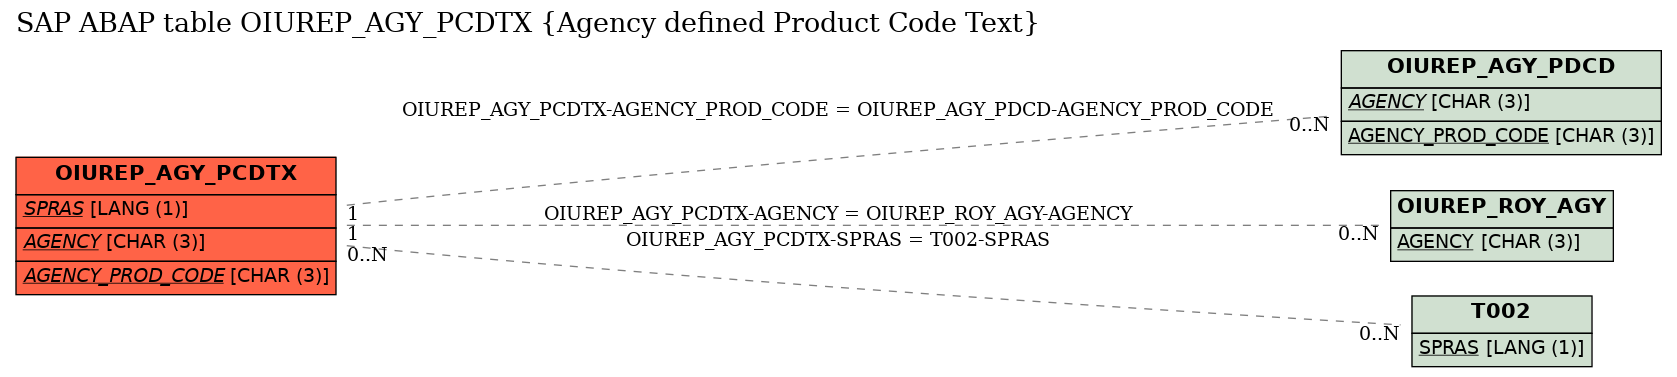 E-R Diagram for table OIUREP_AGY_PCDTX (Agency defined Product Code Text)